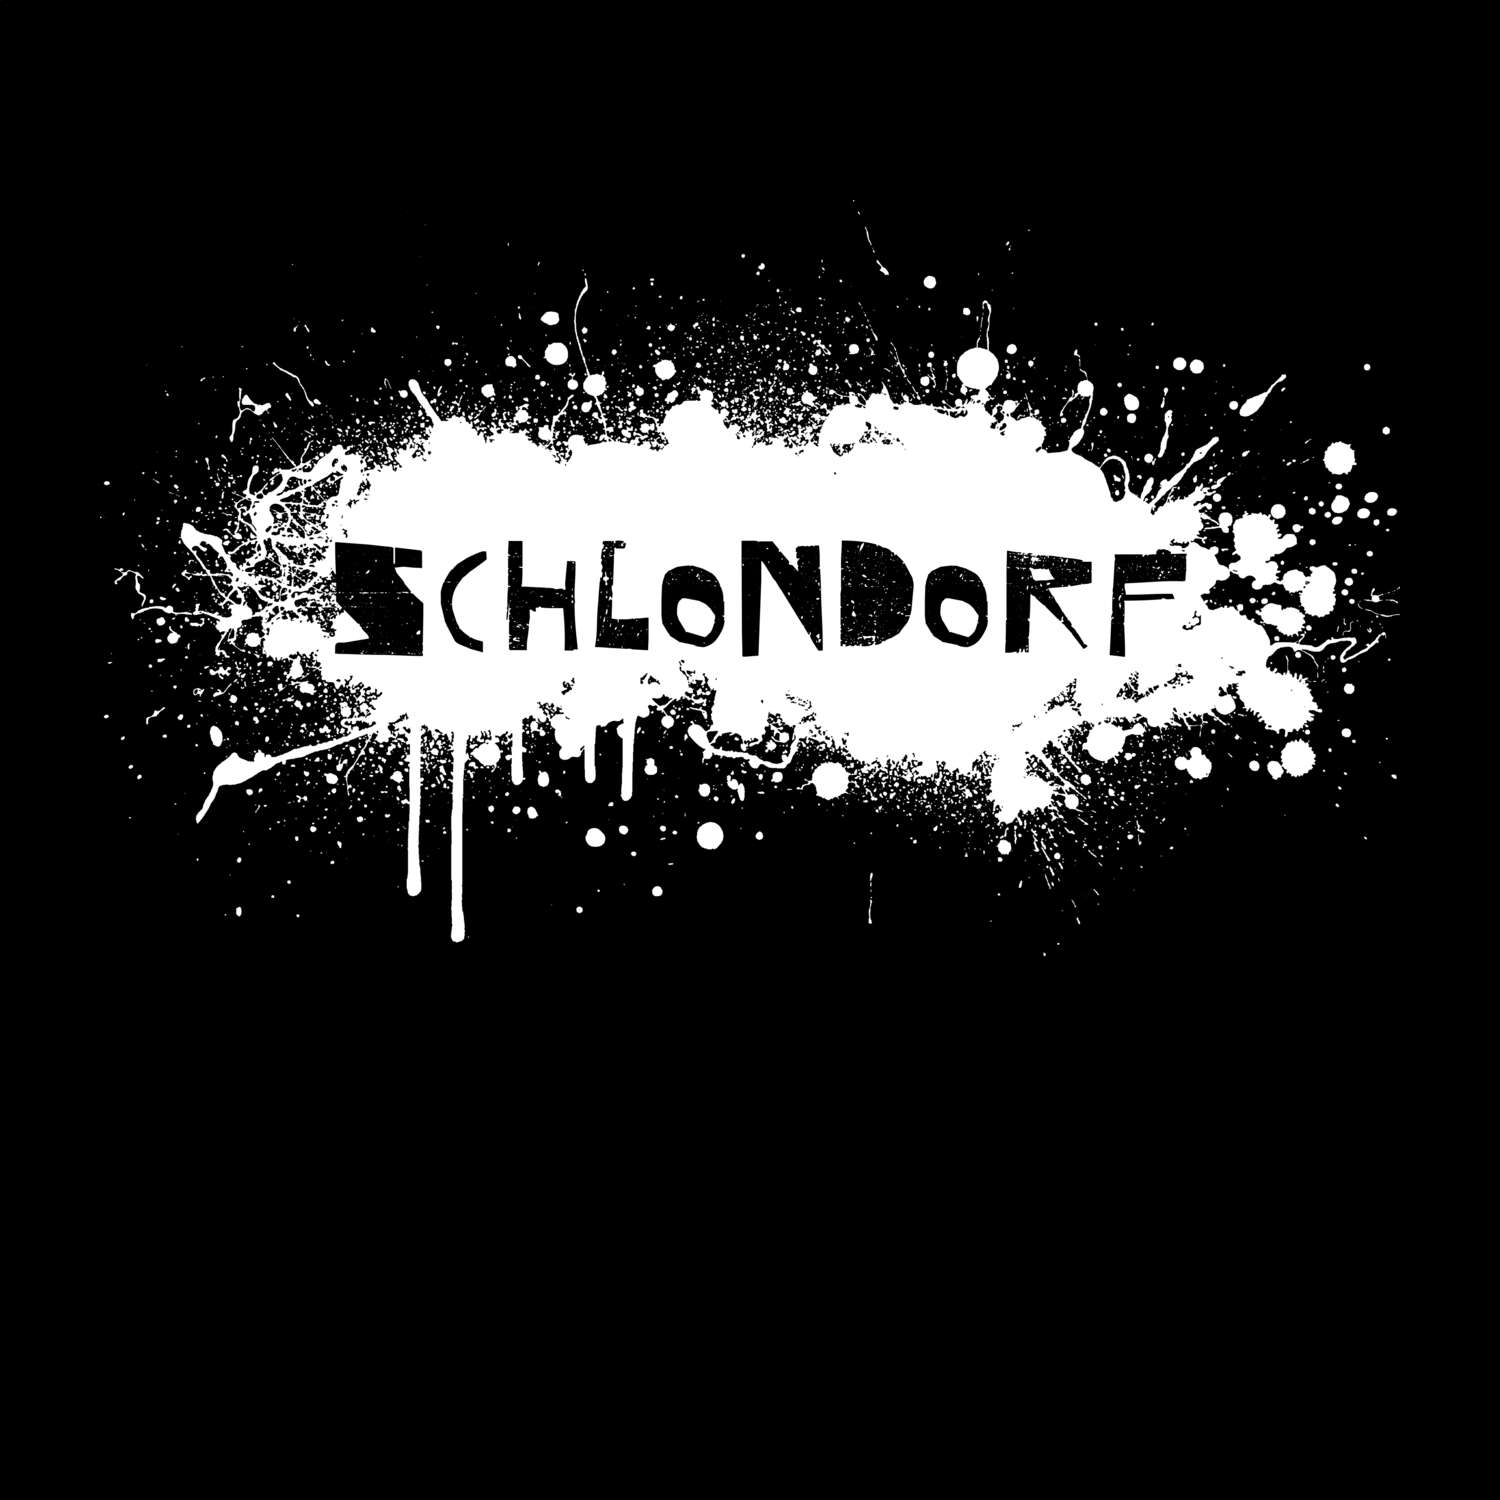 Schlondorf T-Shirt »Paint Splash Punk«